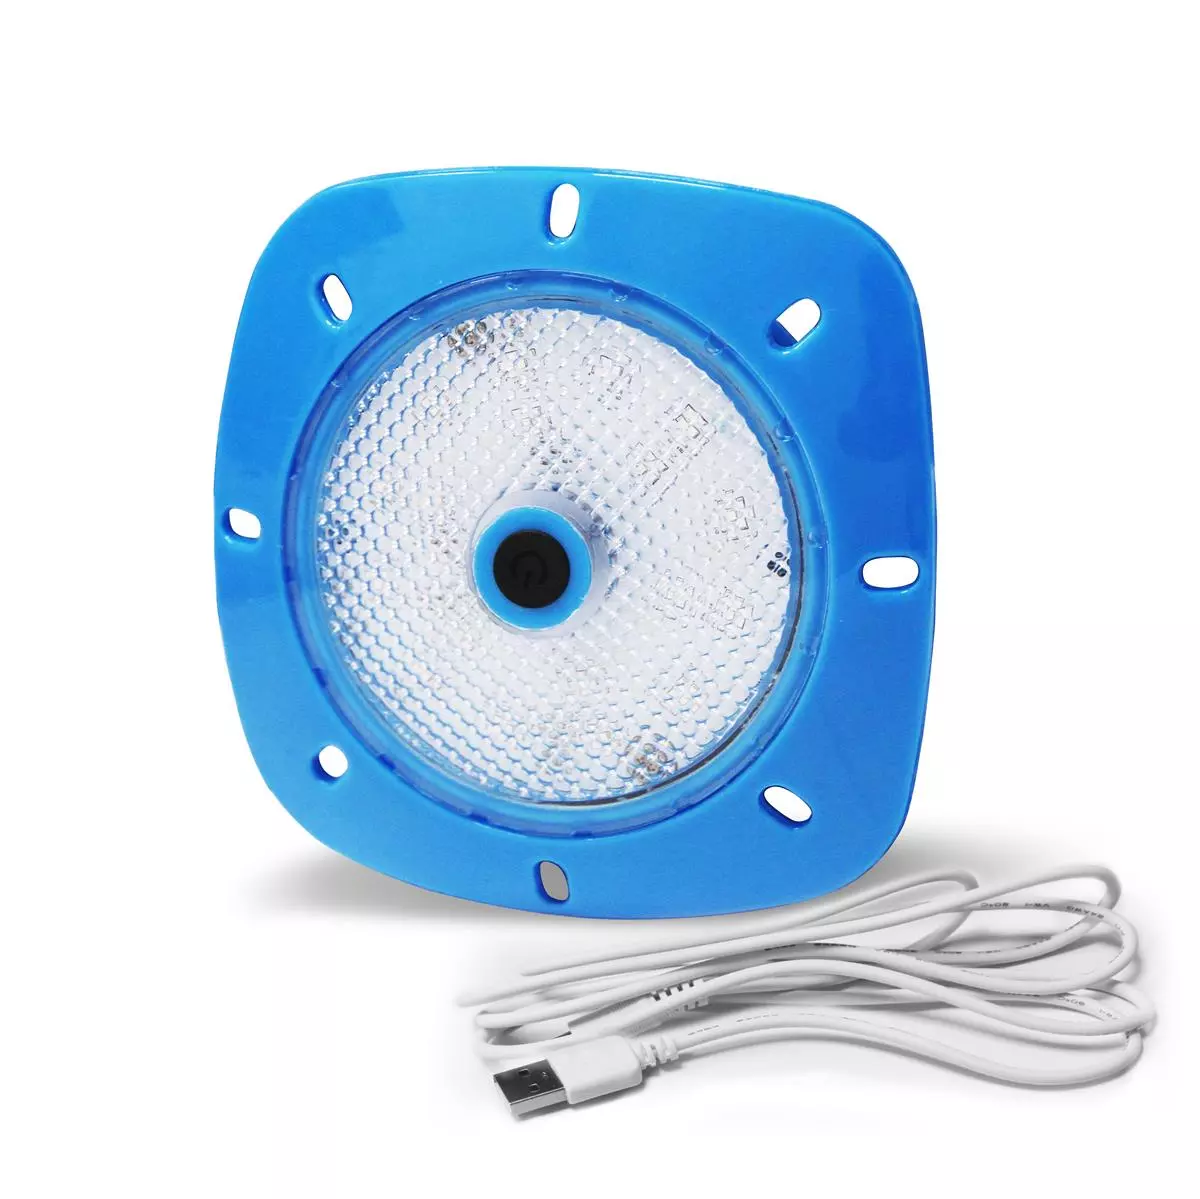 https://www.pool-profishop24.de/media/10/e5/e0/1701781335/502051-led-magnet-scheinwerfer-blau.webp